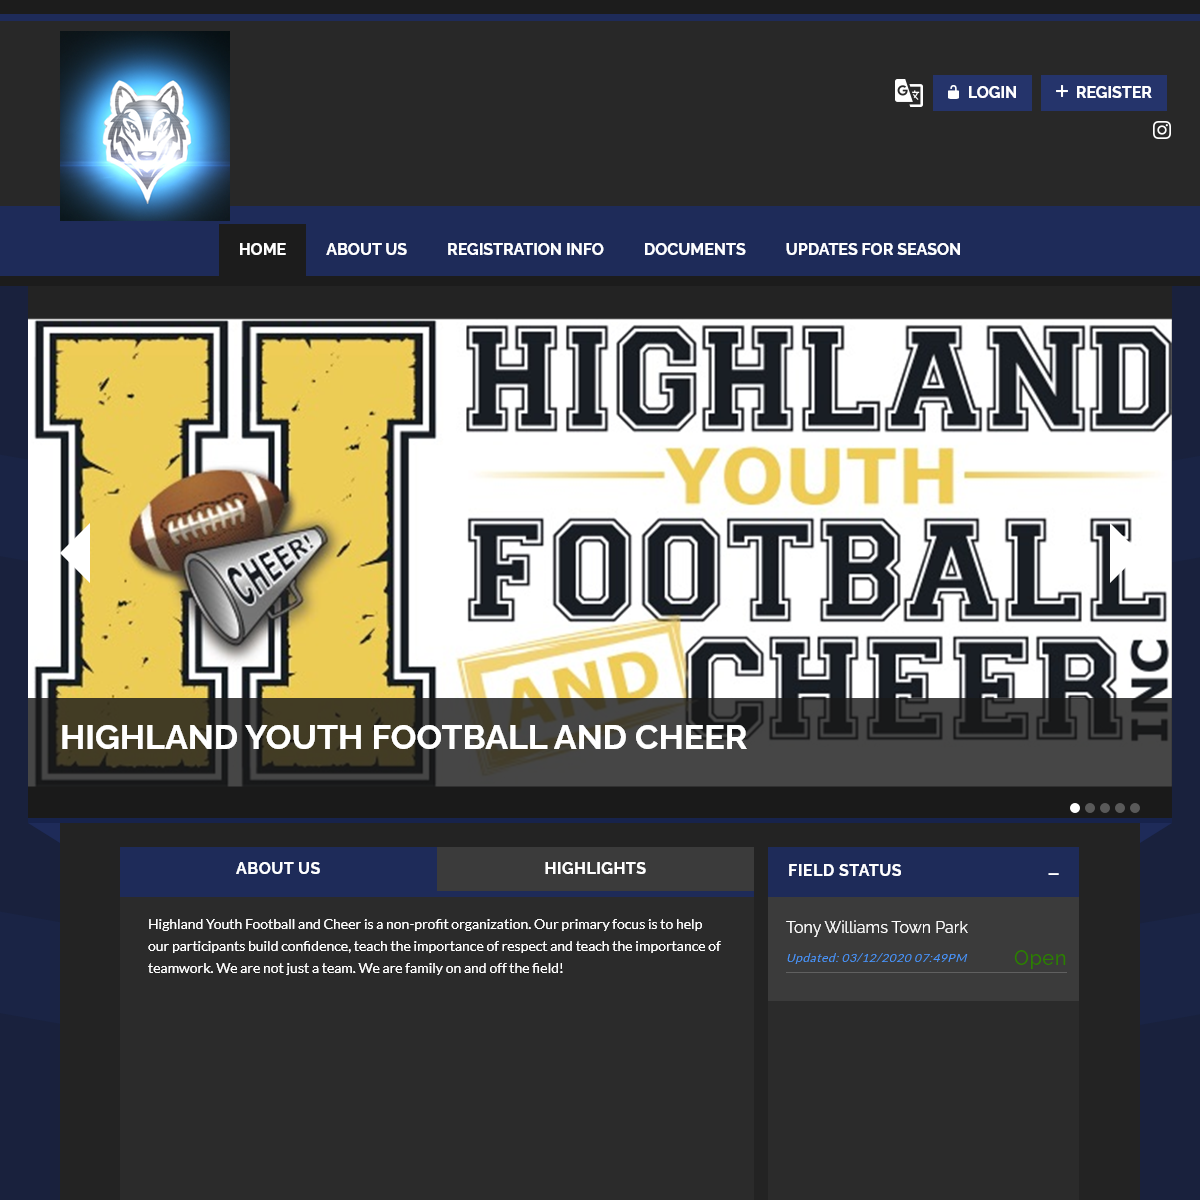 A complete backup of highlandyouthfootballandcheer.com